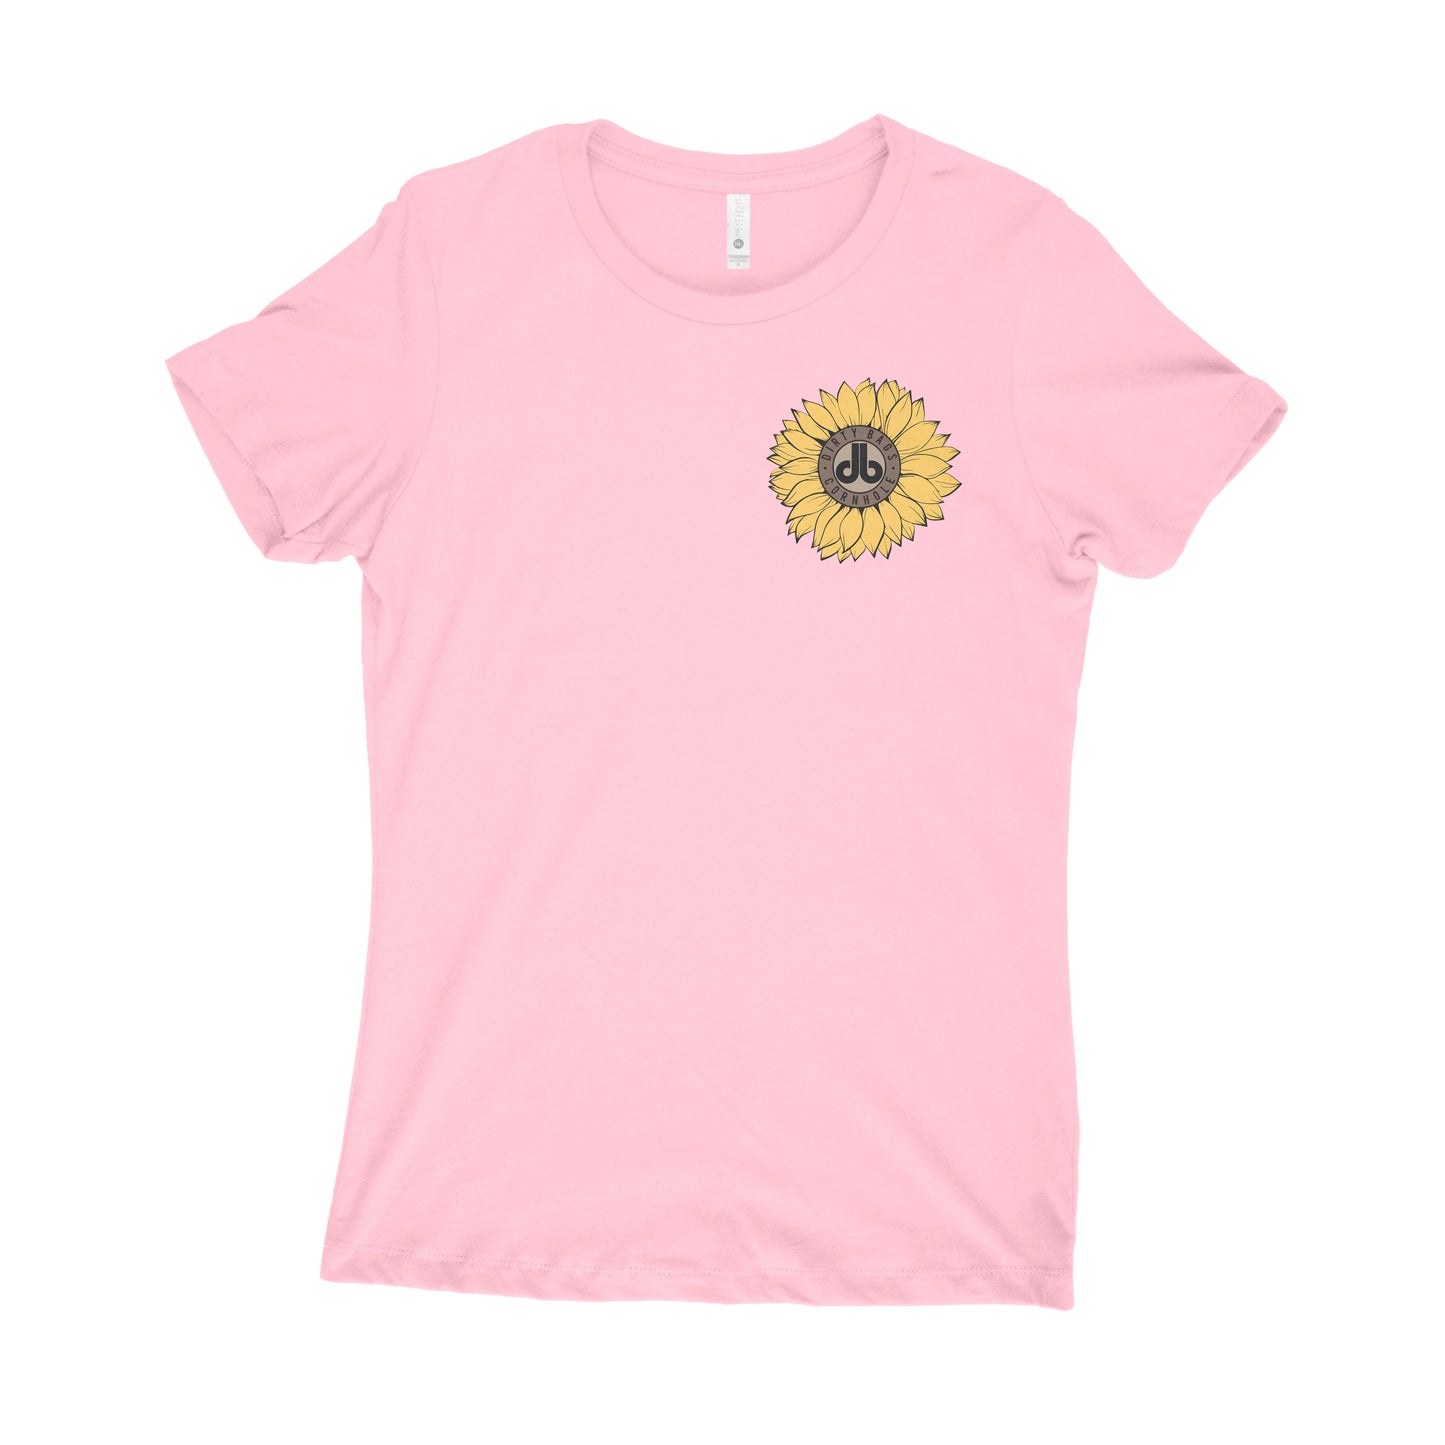 db Sunflower Ladies T Shirt